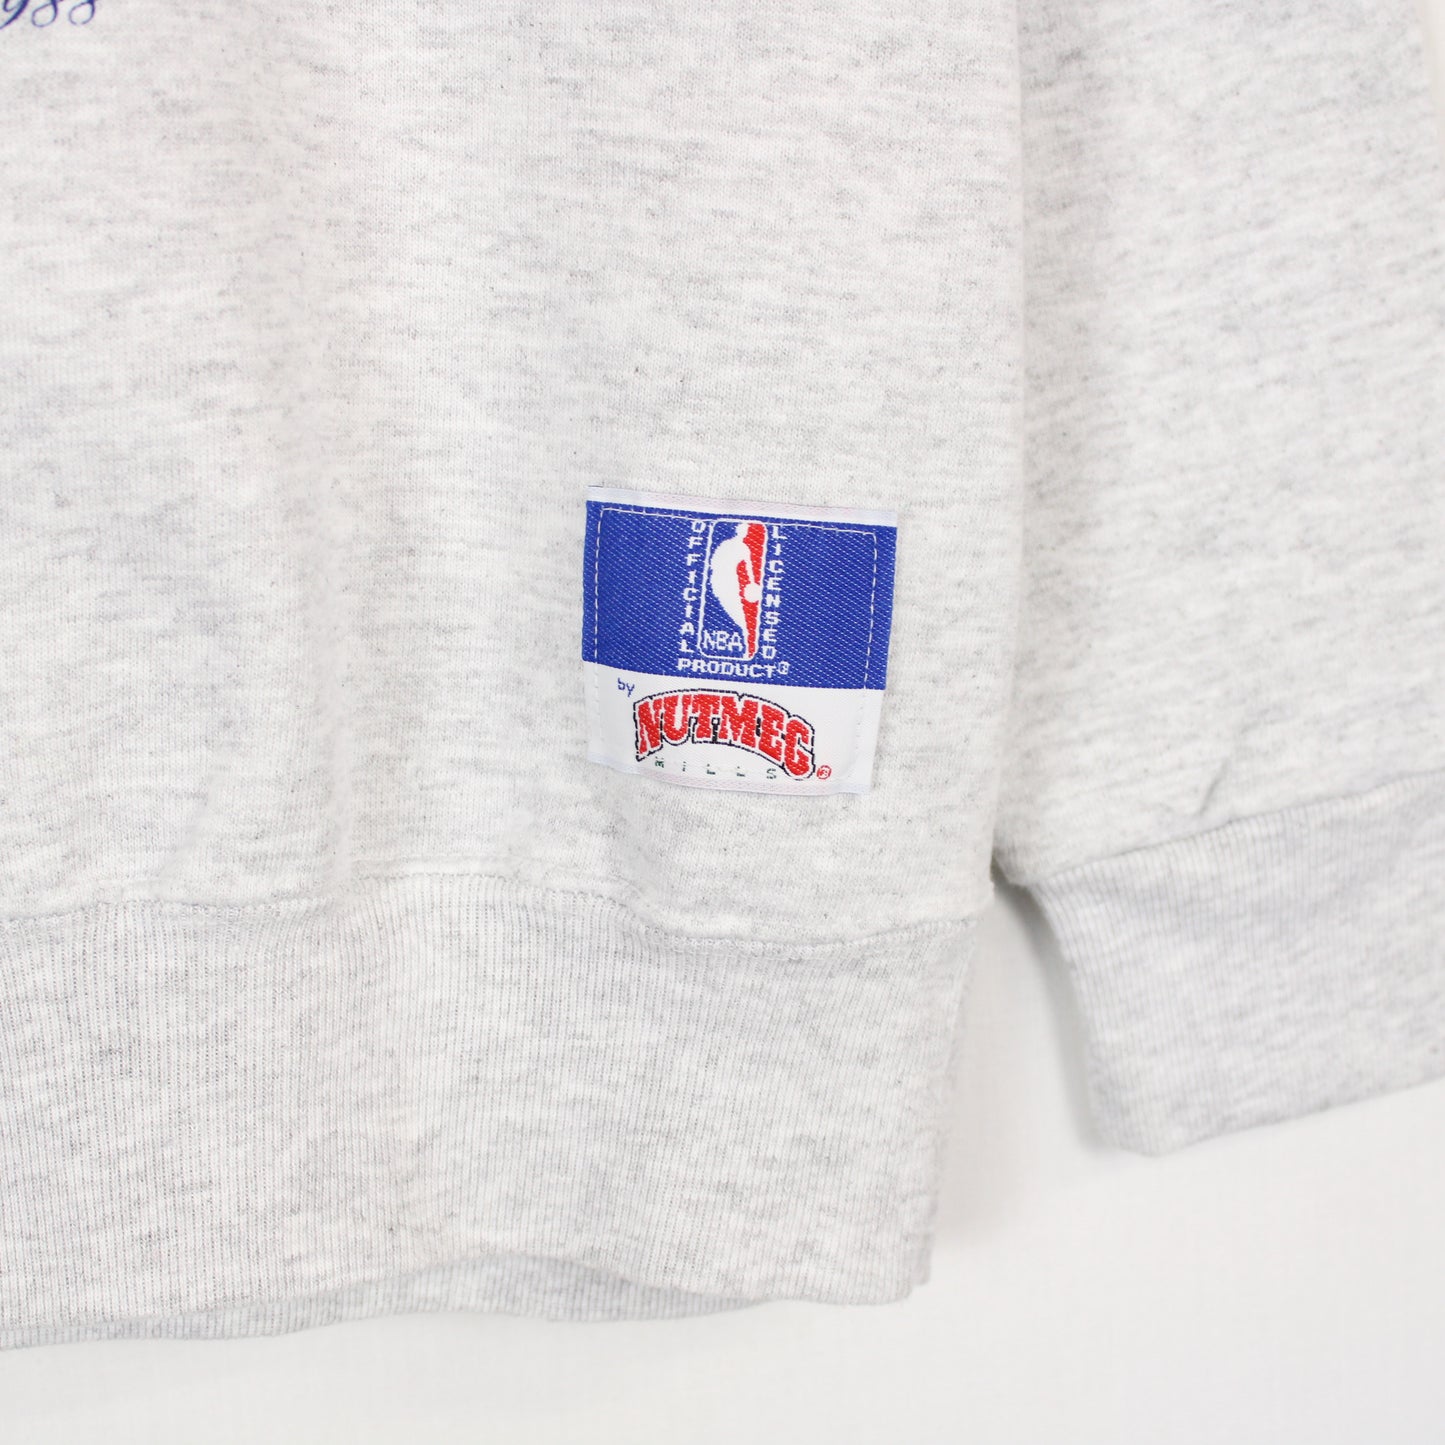 Vintage Detroit Pistons NBA Sweatshirt - L